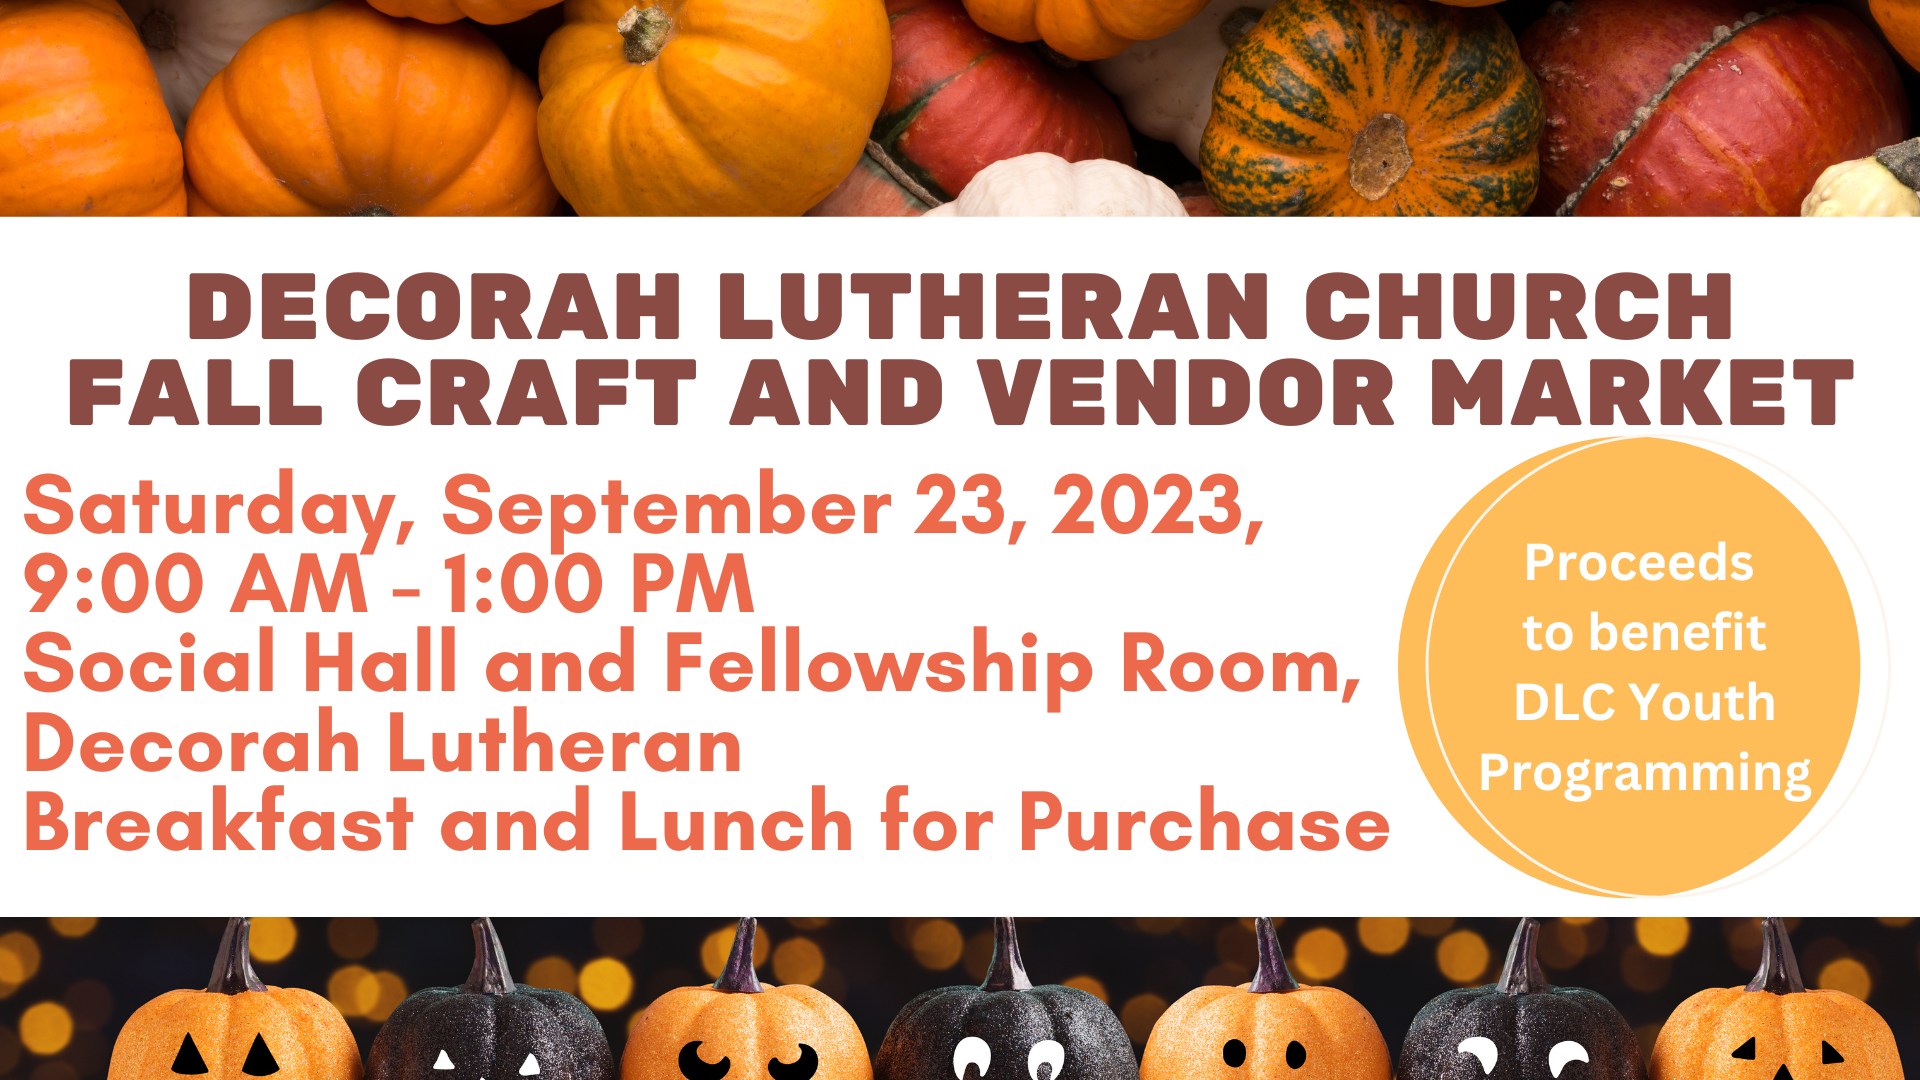 Decorah Lutheran Fall Craft and Vendor Market to Benefit DLC Youth Programming thumbnail